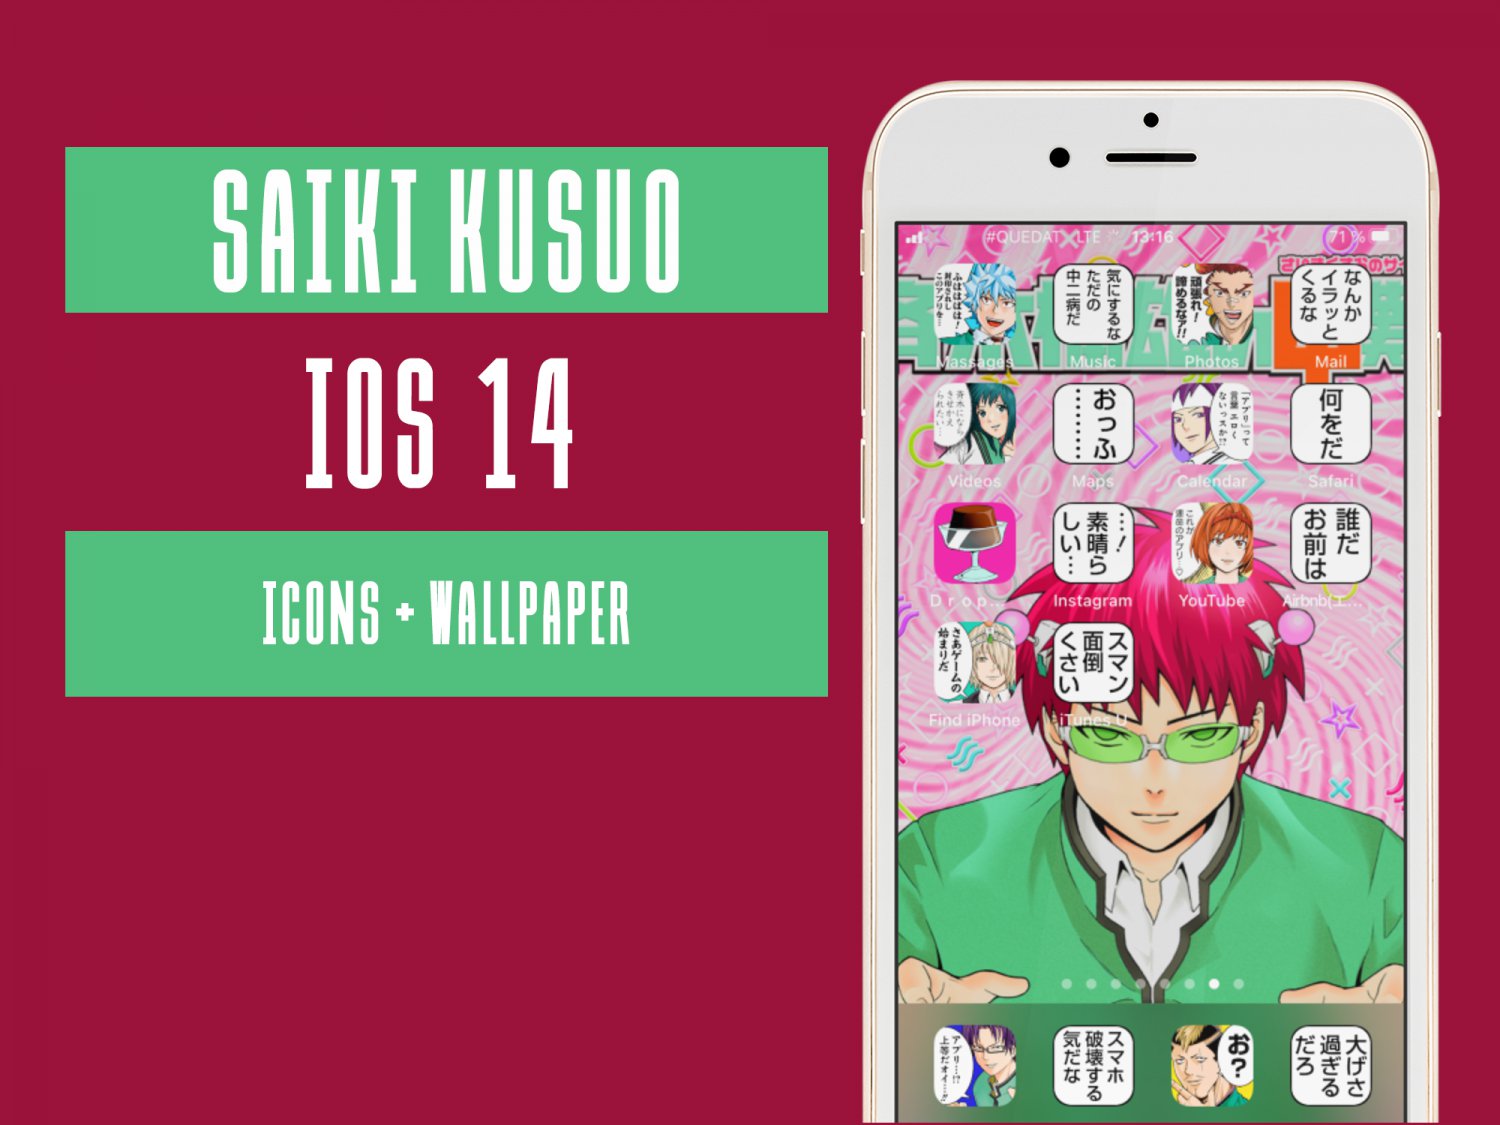 Anime app icon | App icon design, Mobile app icon, App icon